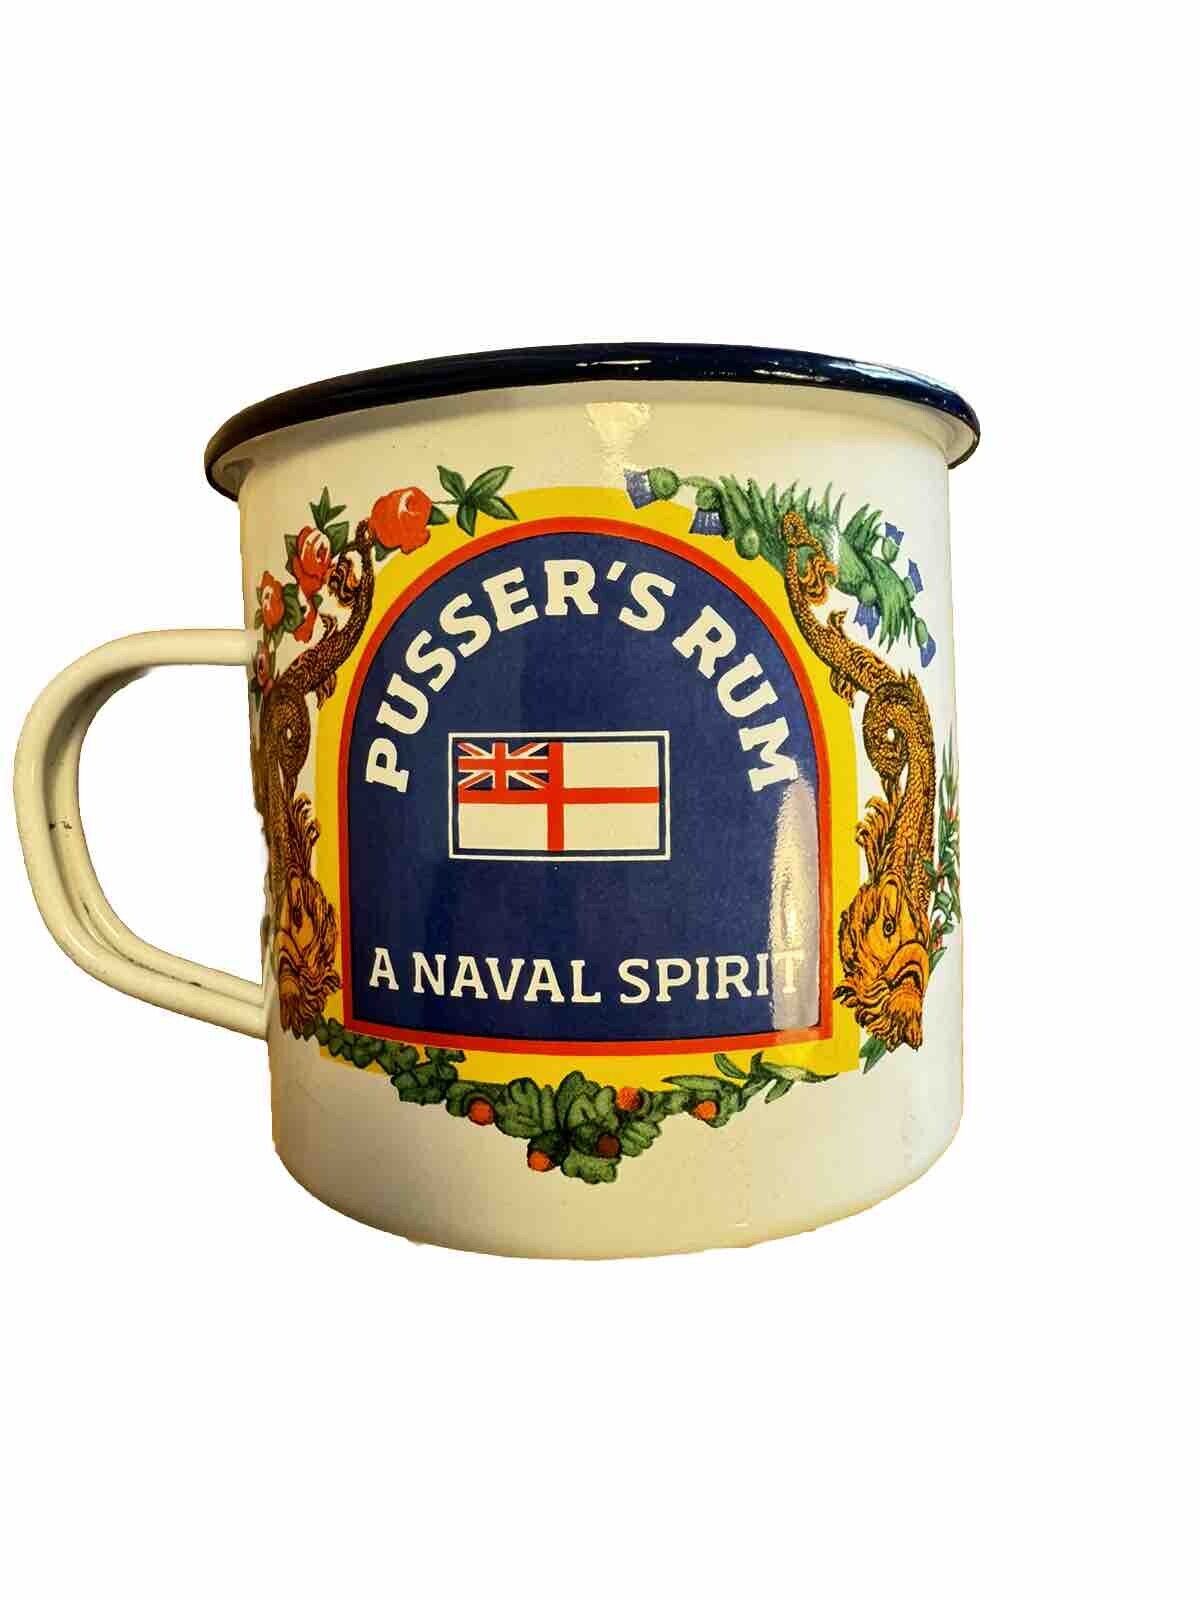 Pusser's Rum A Naval Spirit & Painkiller Recipe Tin Enamel Mug Cup